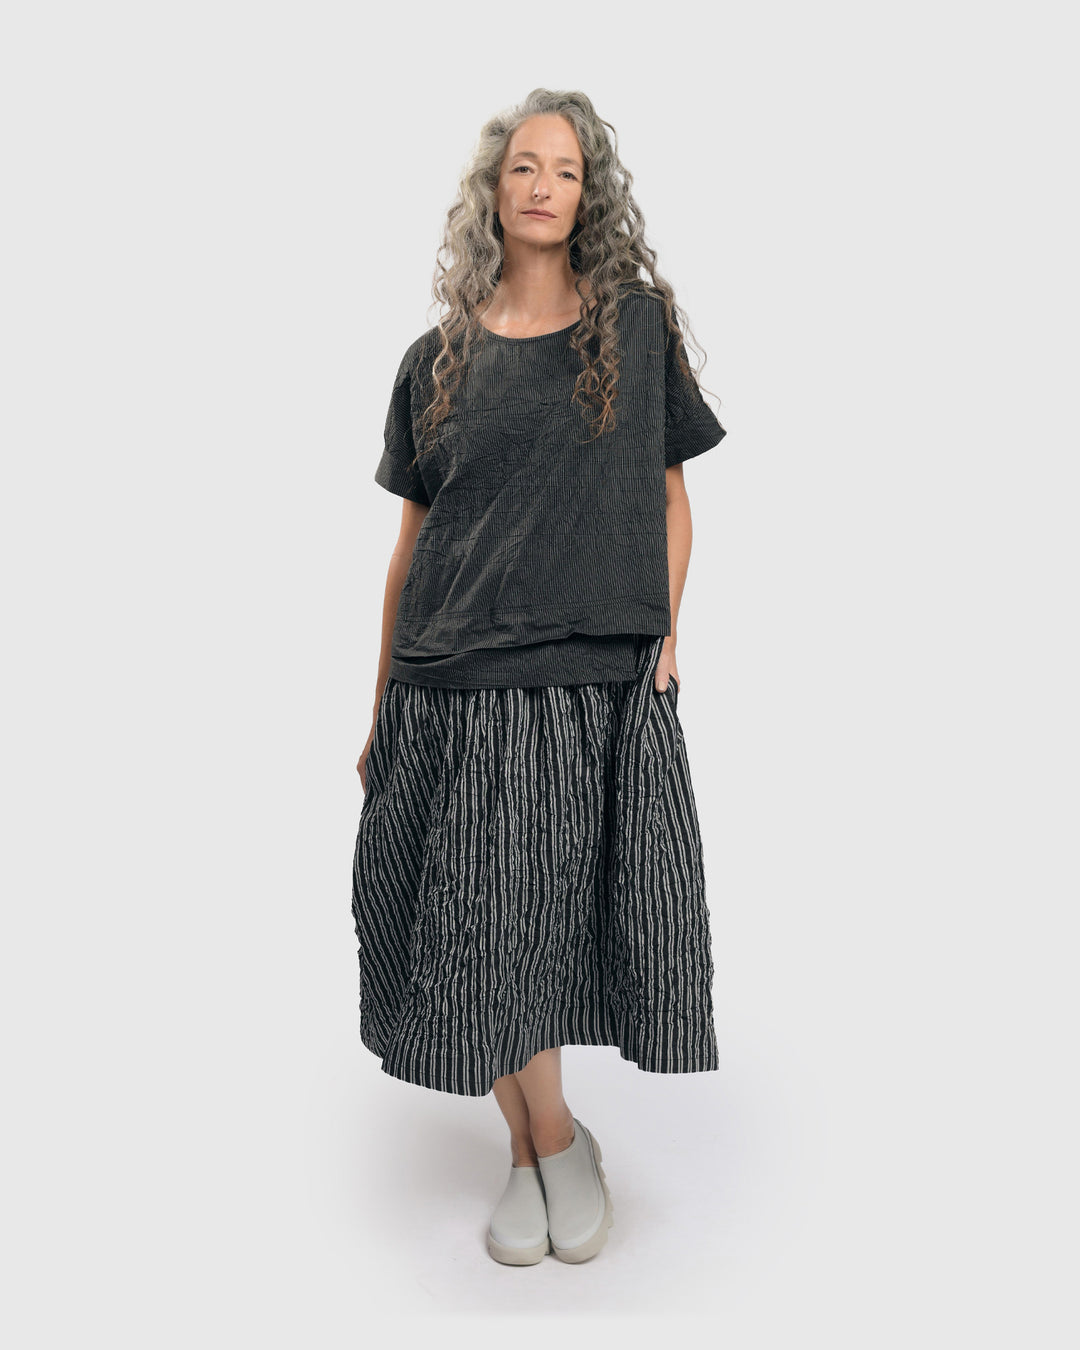 Urban Pinstripe Crinkle Maxi Dress, Silver/black